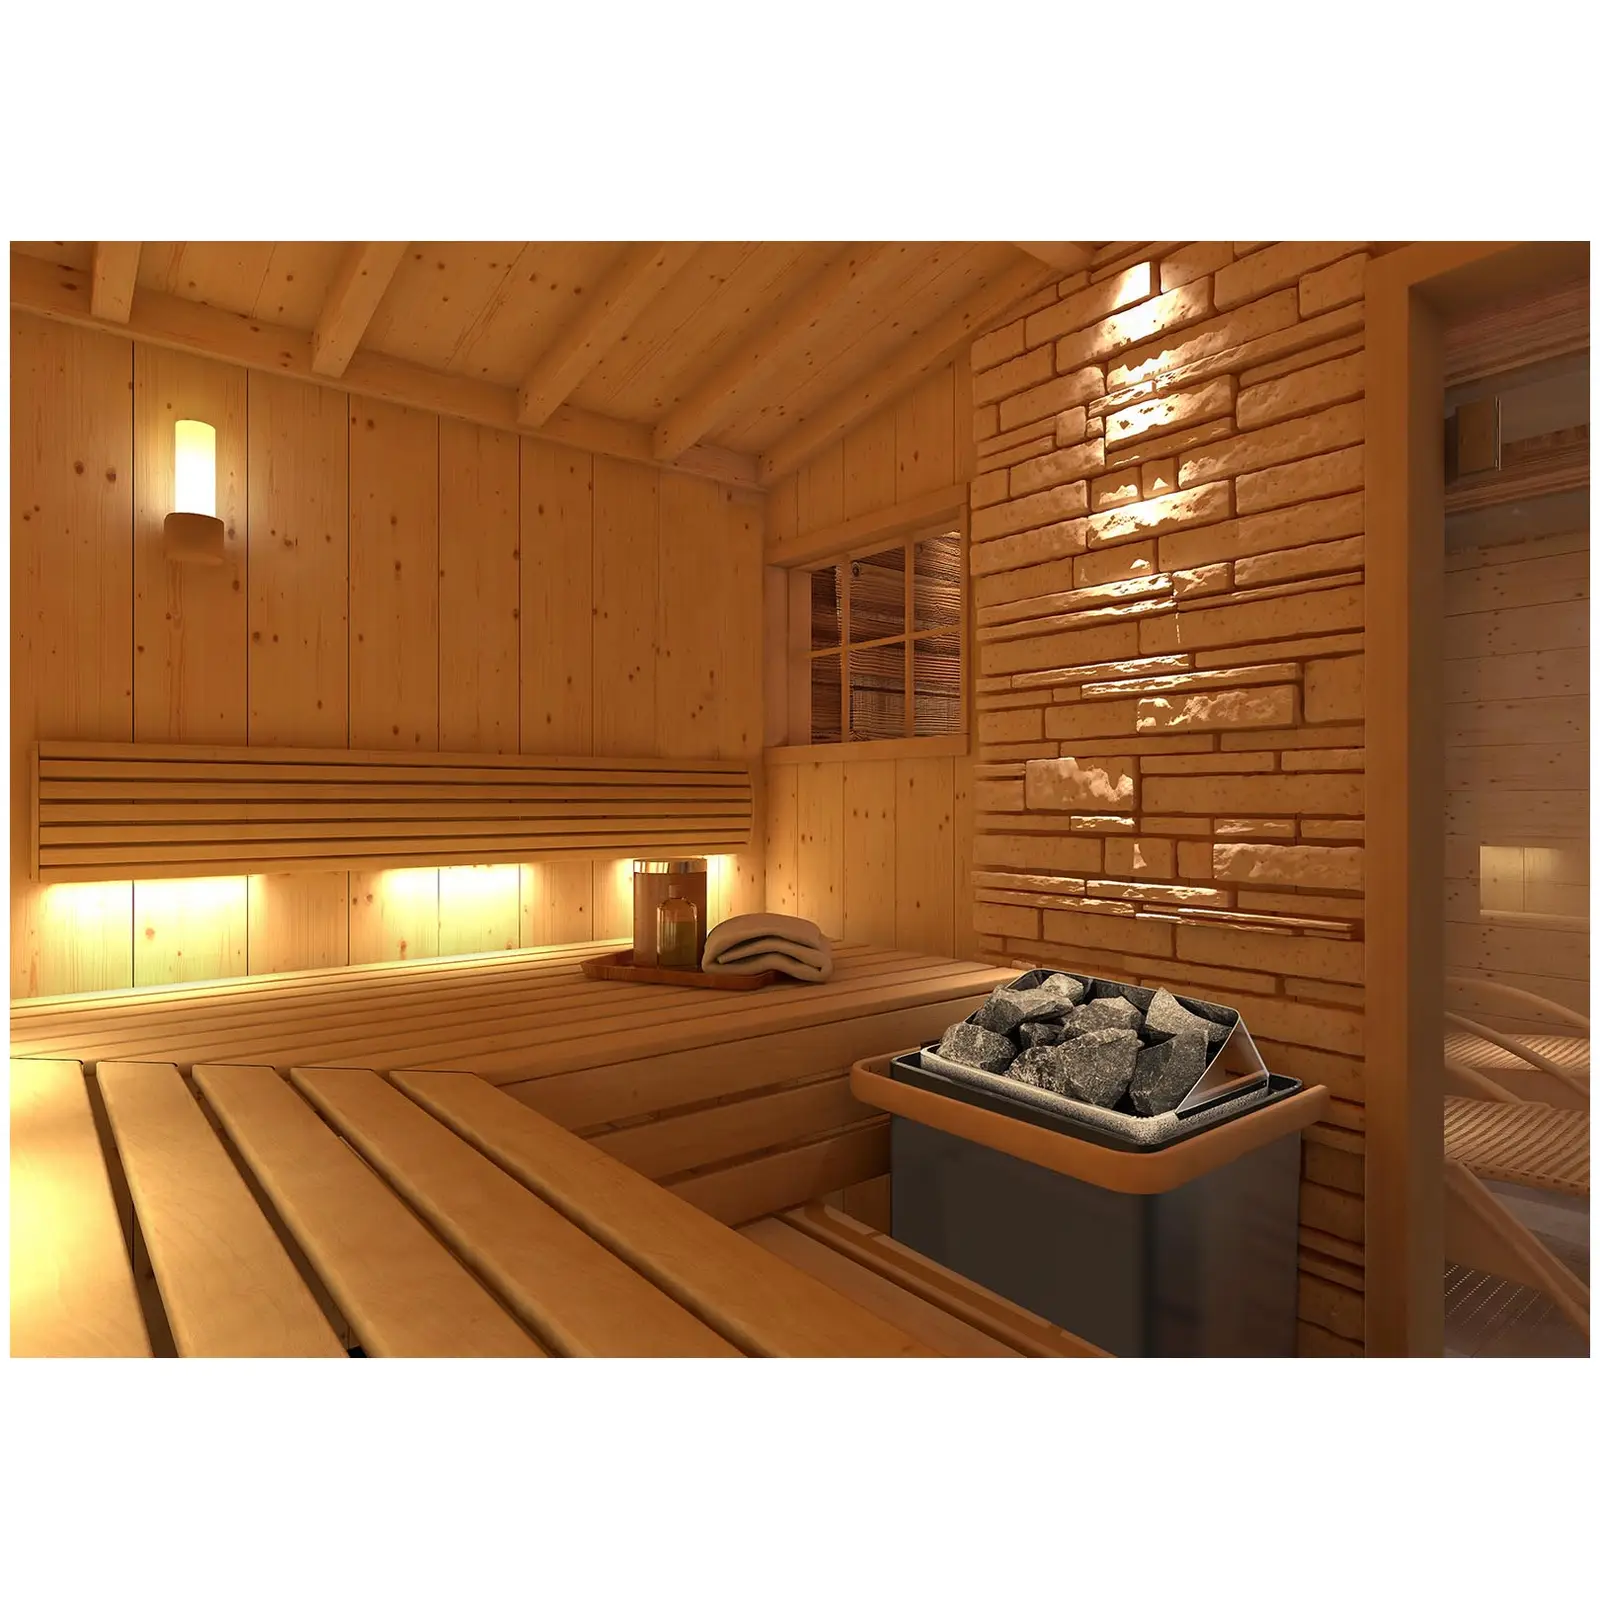 Aquecedor para sauna - elétrico - 9 kW